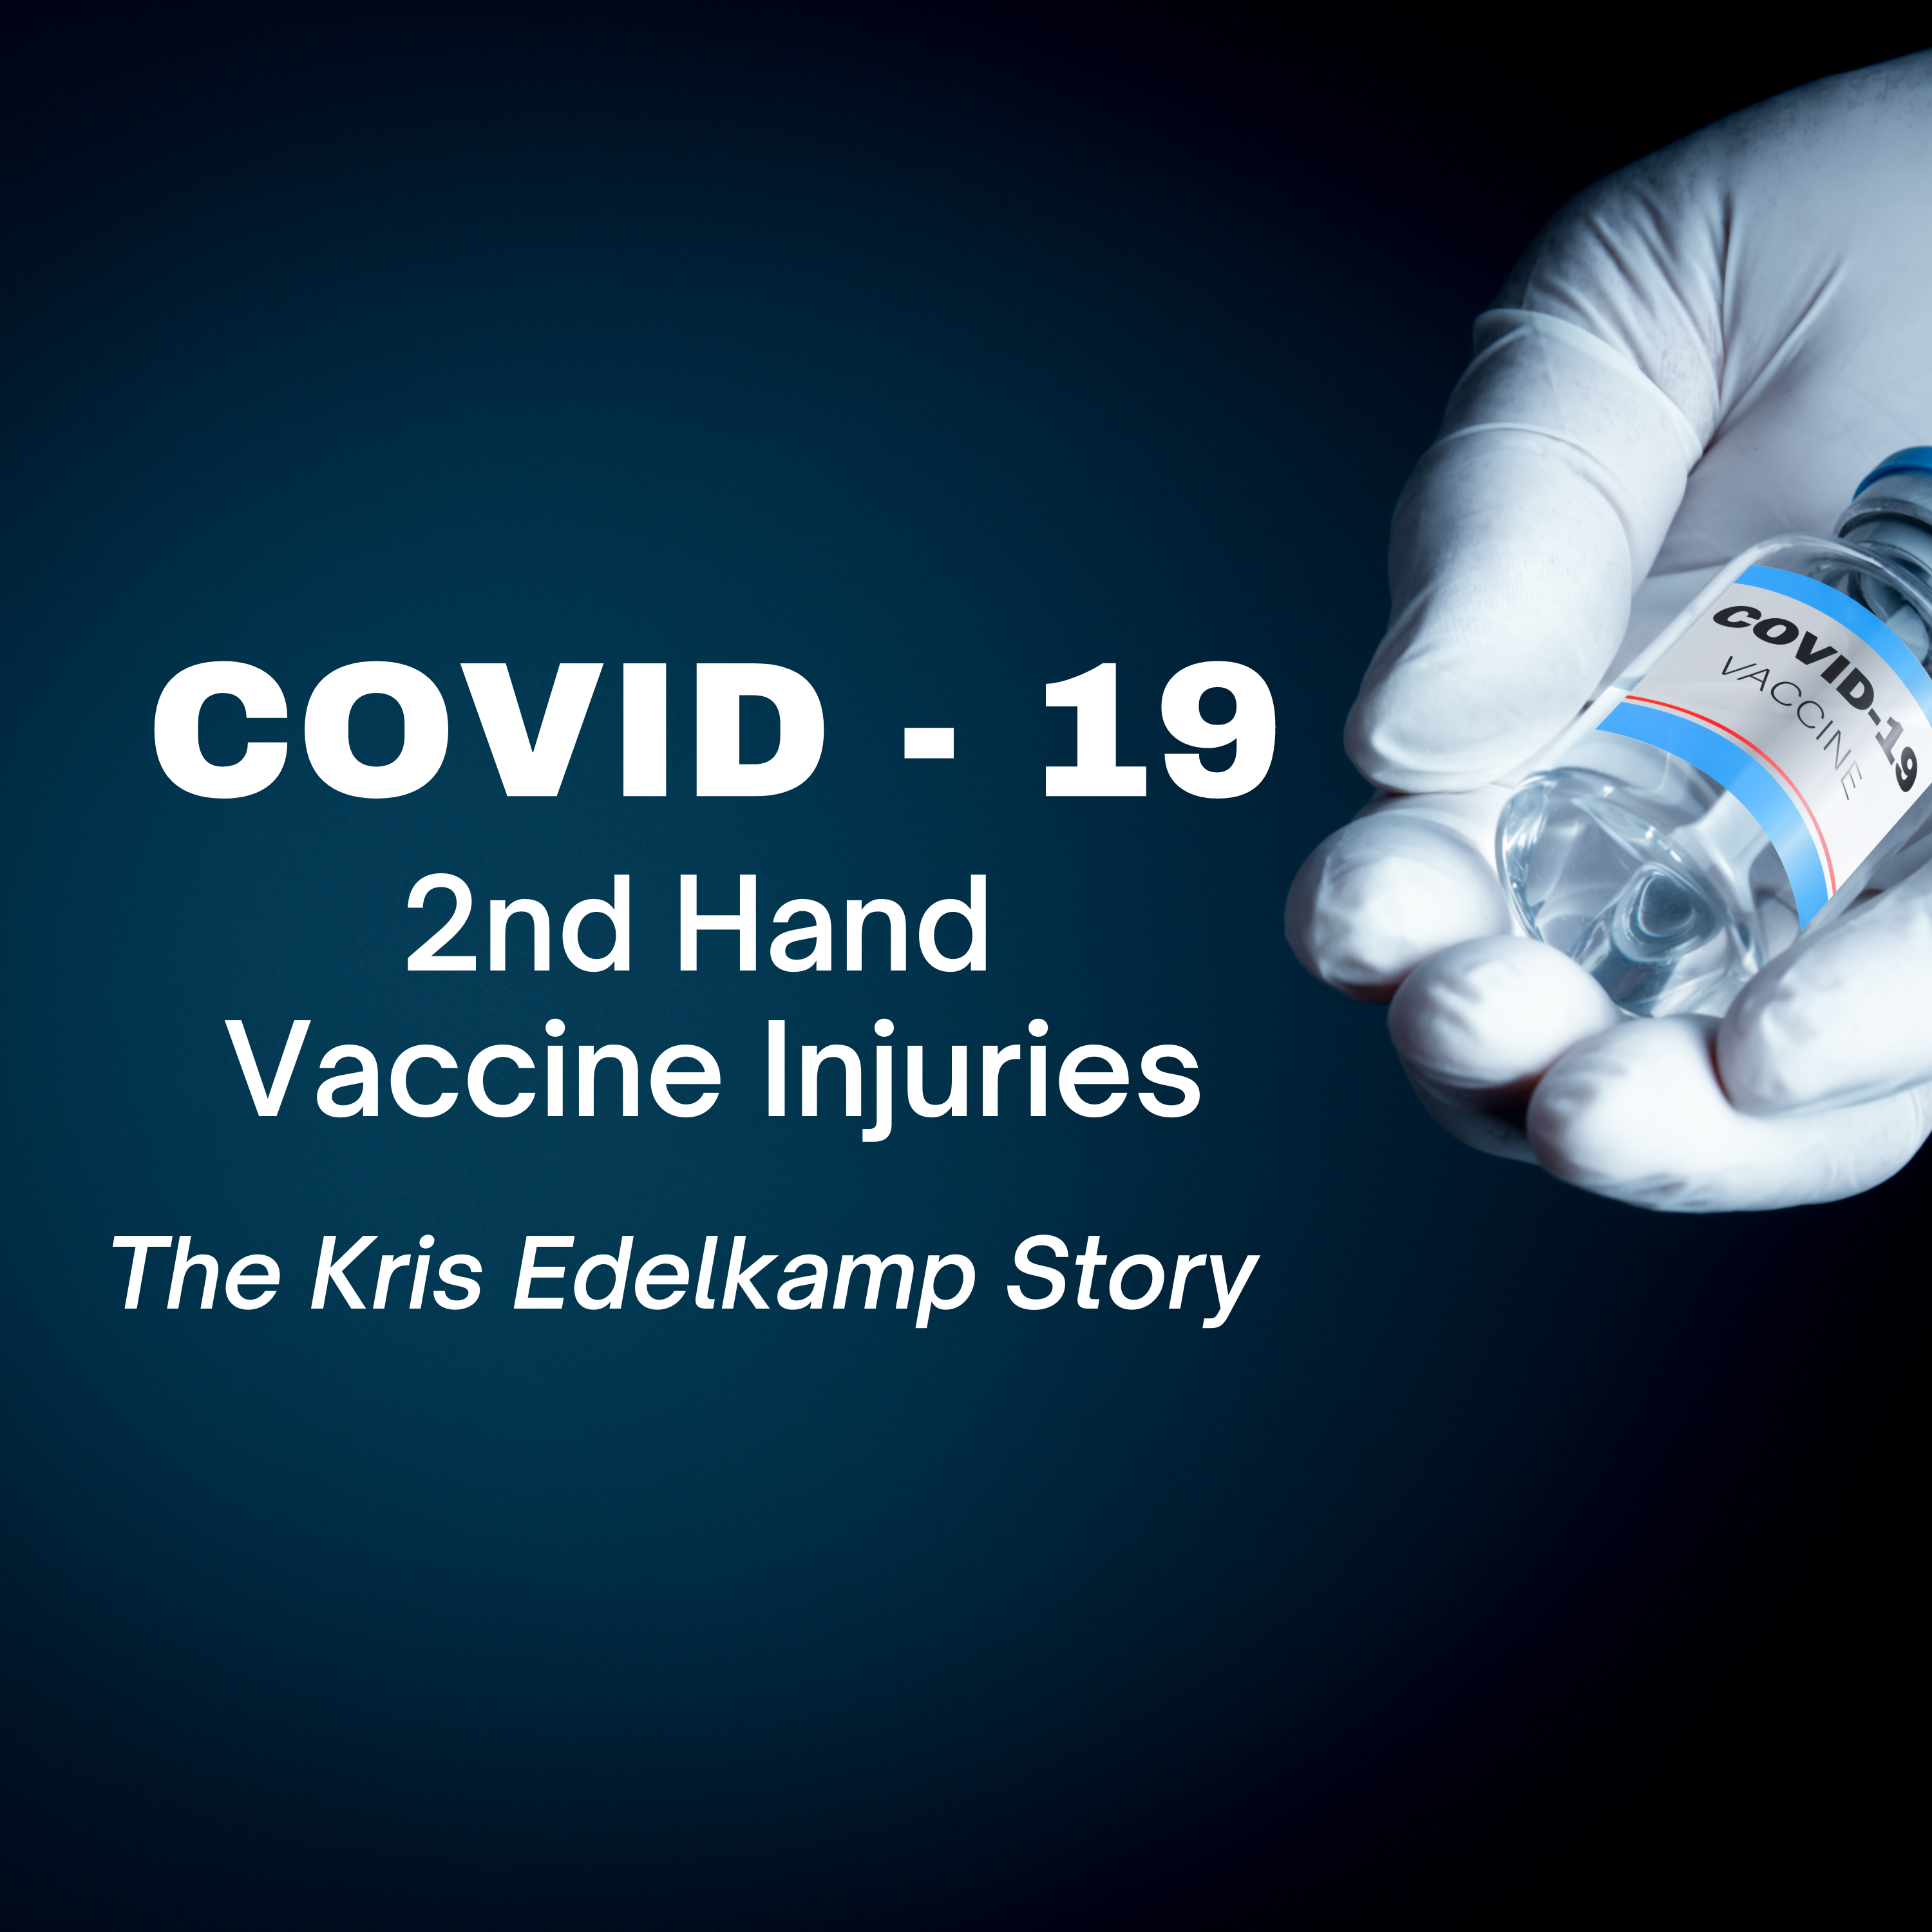 2nd Hand Covid Vaccine Injuries - The Kris Edelkamp Story